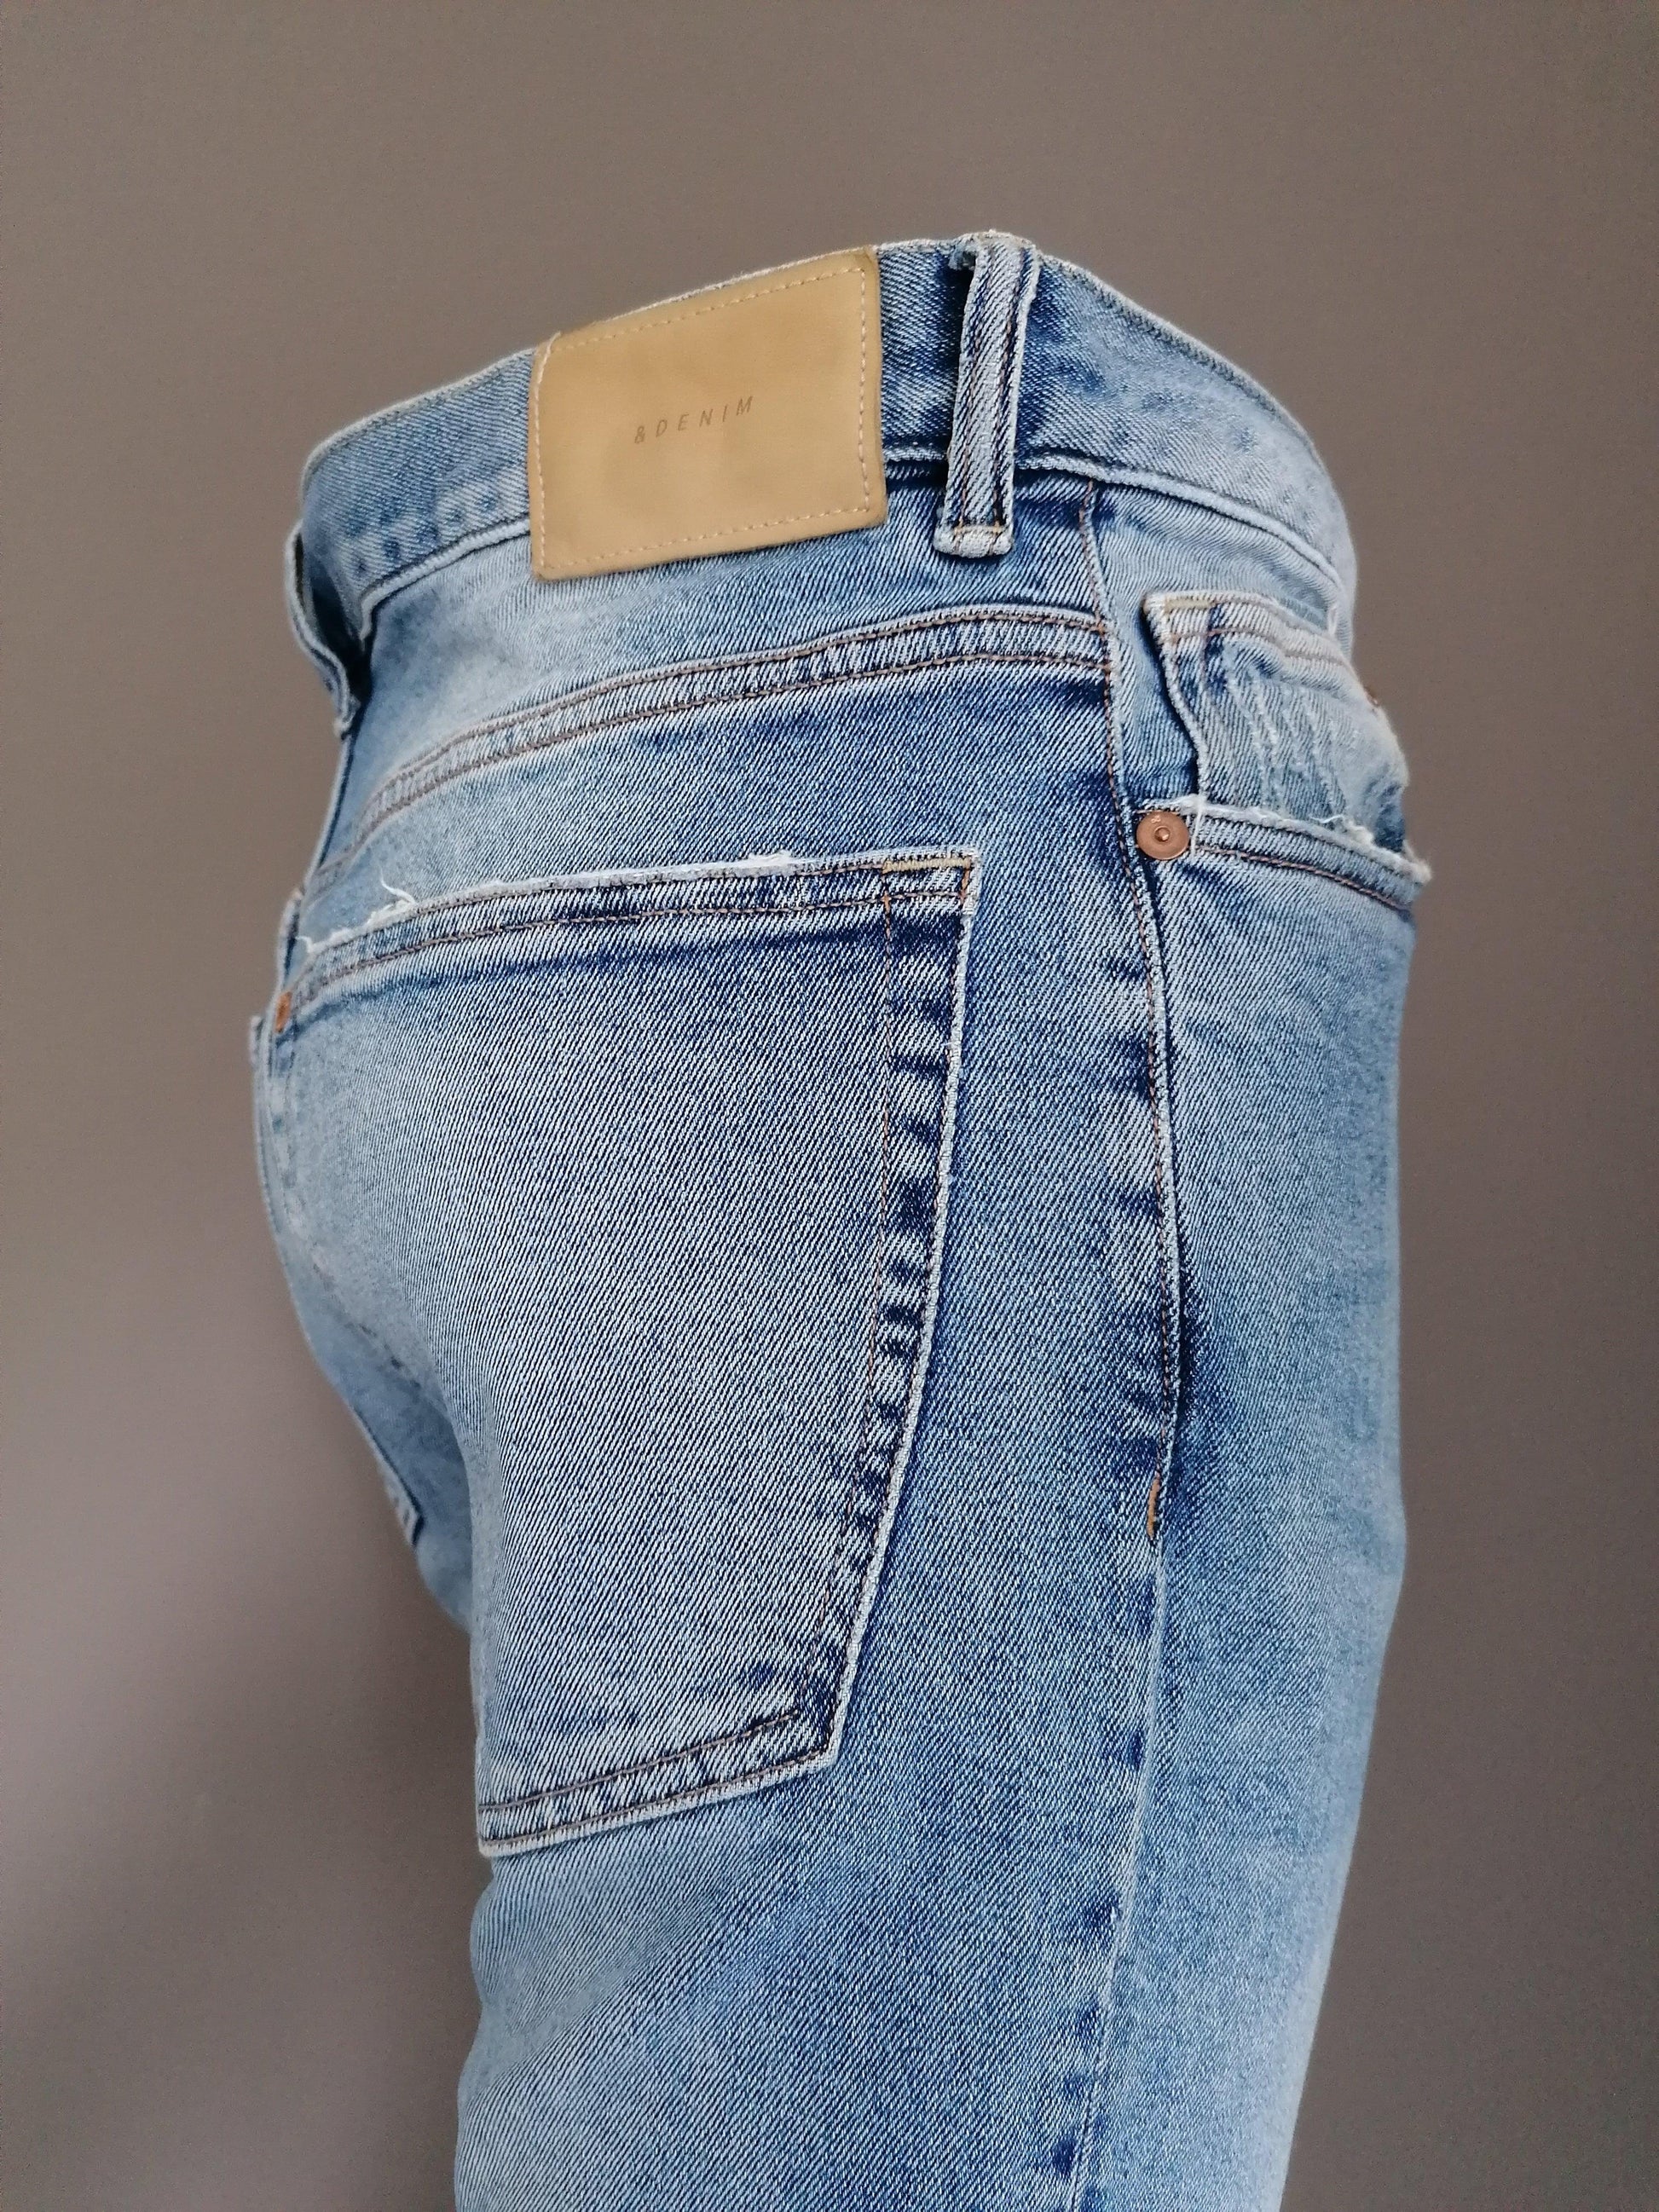 &Denim jeans. Blauw gekleurd. Maat W34 - L28. Type Relaxed Skinny Cropped. - EcoGents